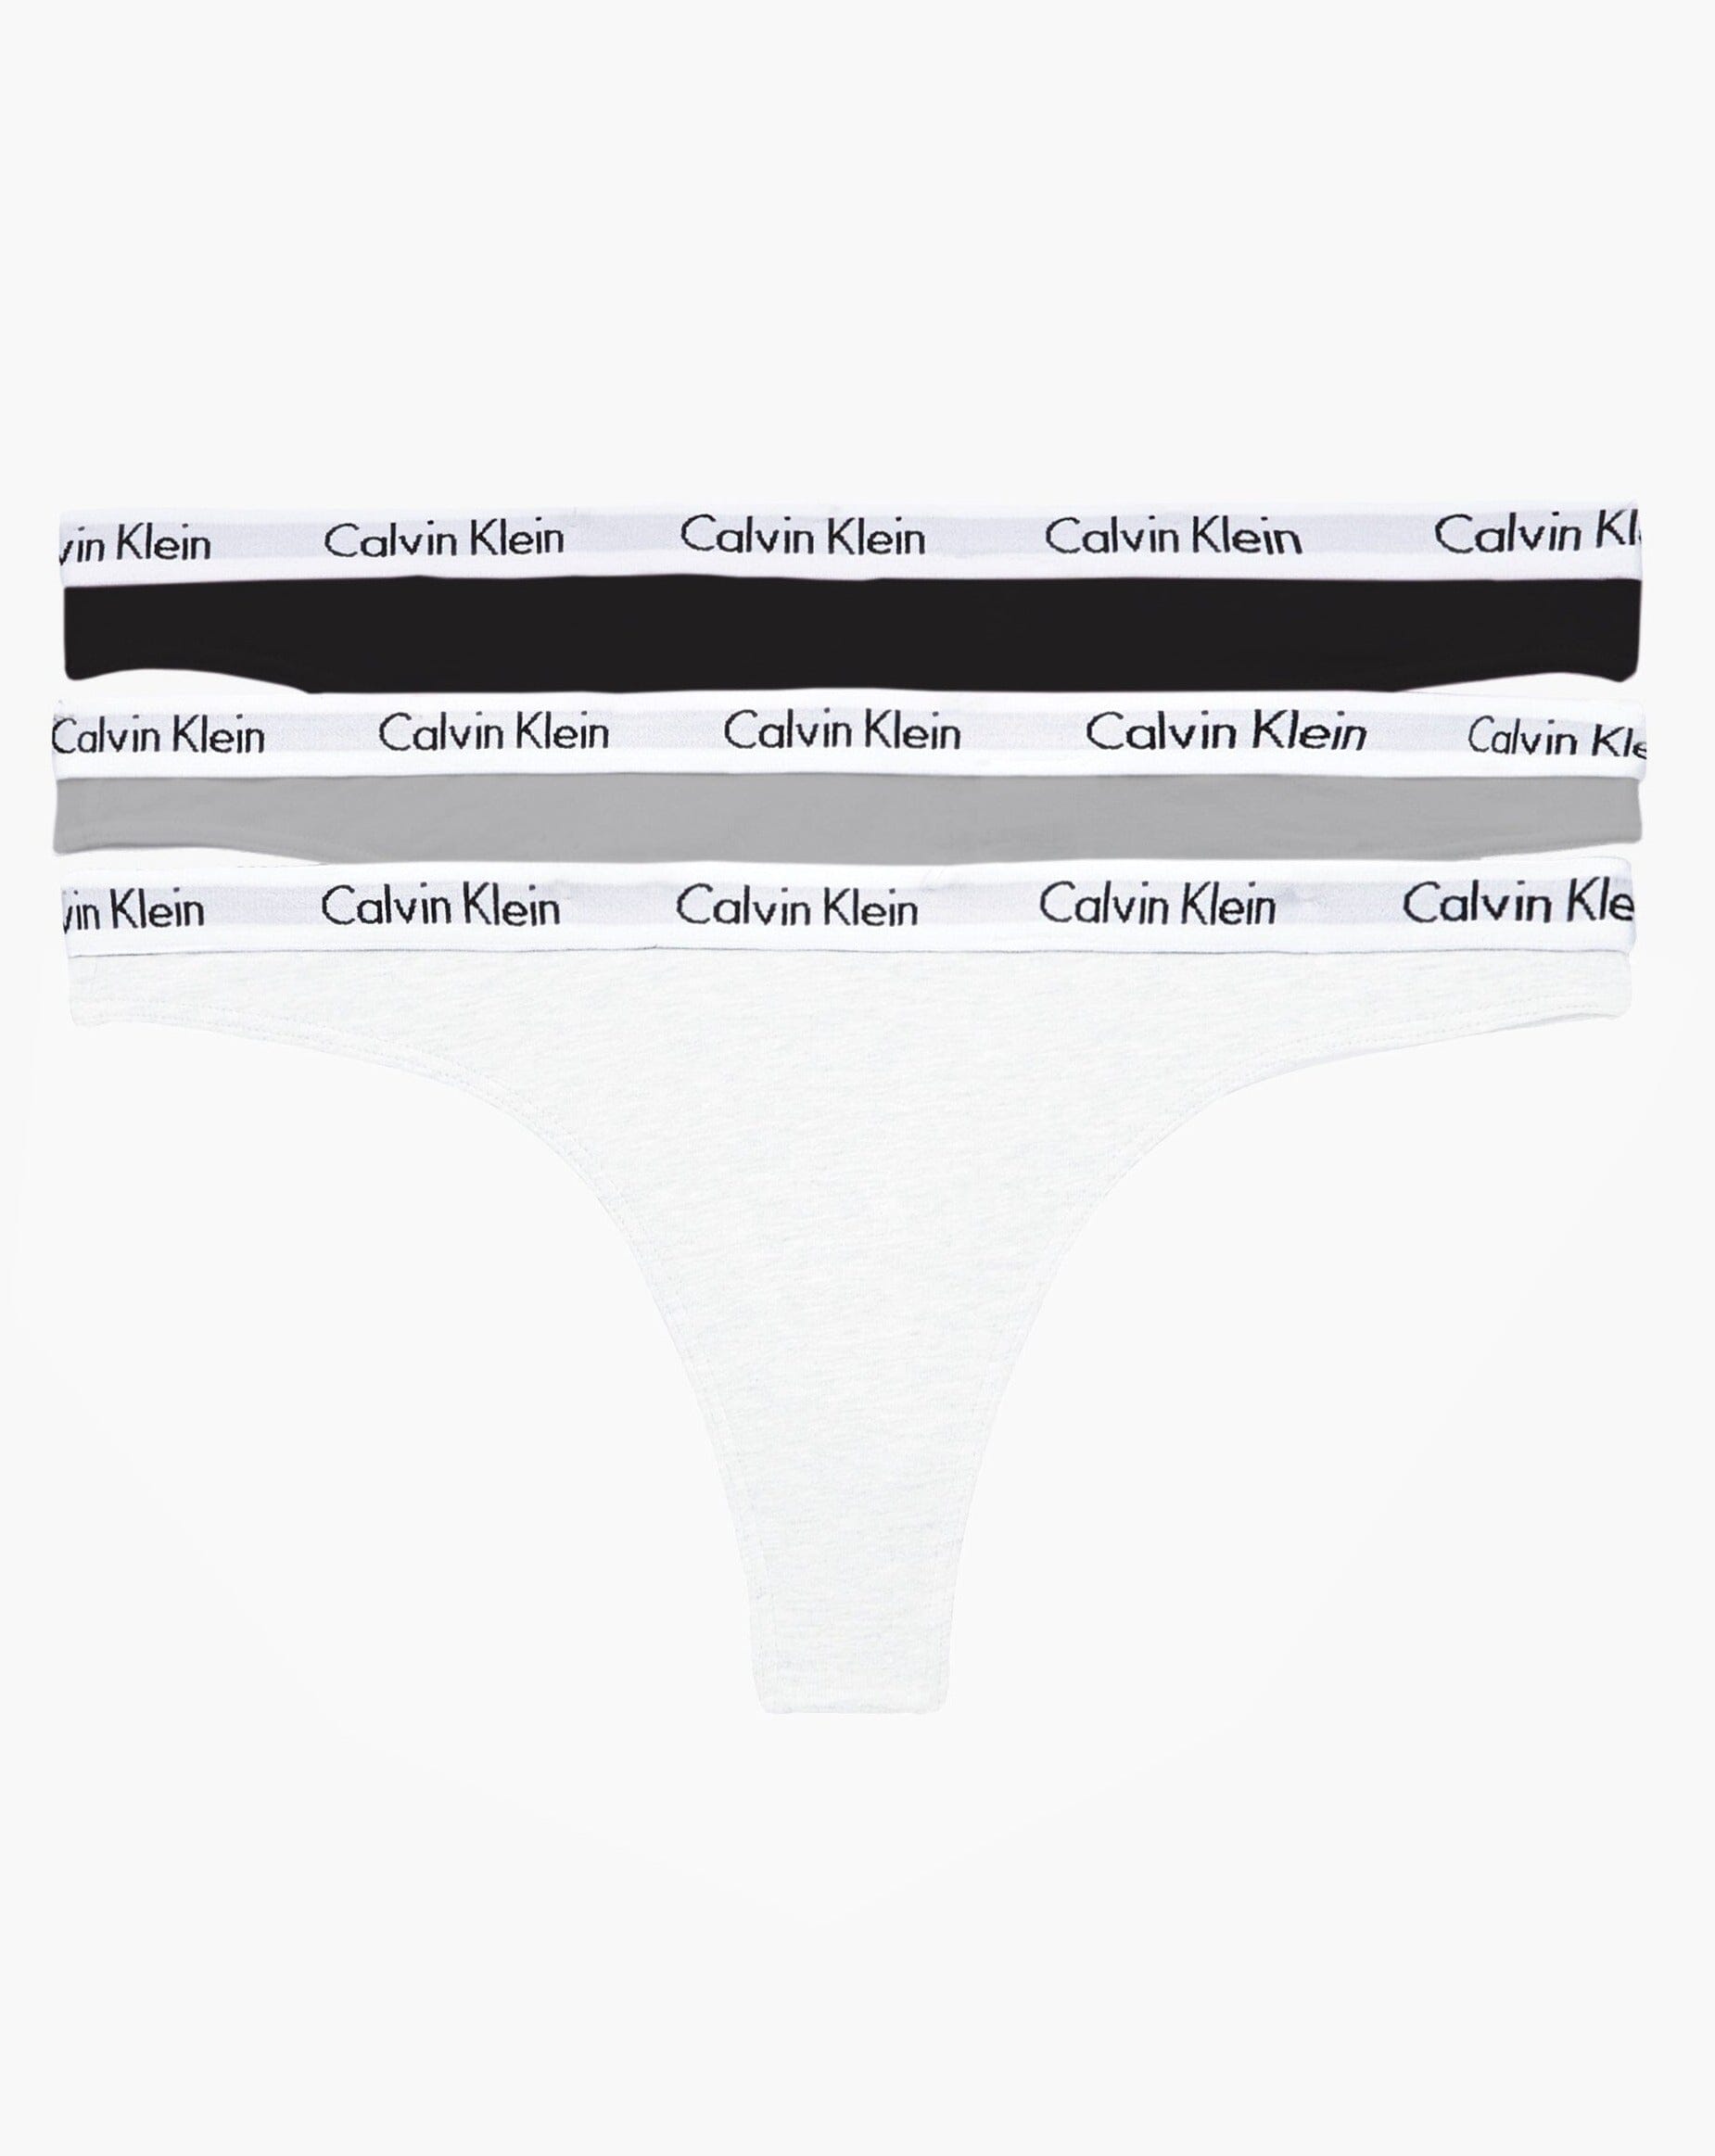 Calvin Klein Carousel 3 Pack Thong - Black/Grey Heather/White - Curvy